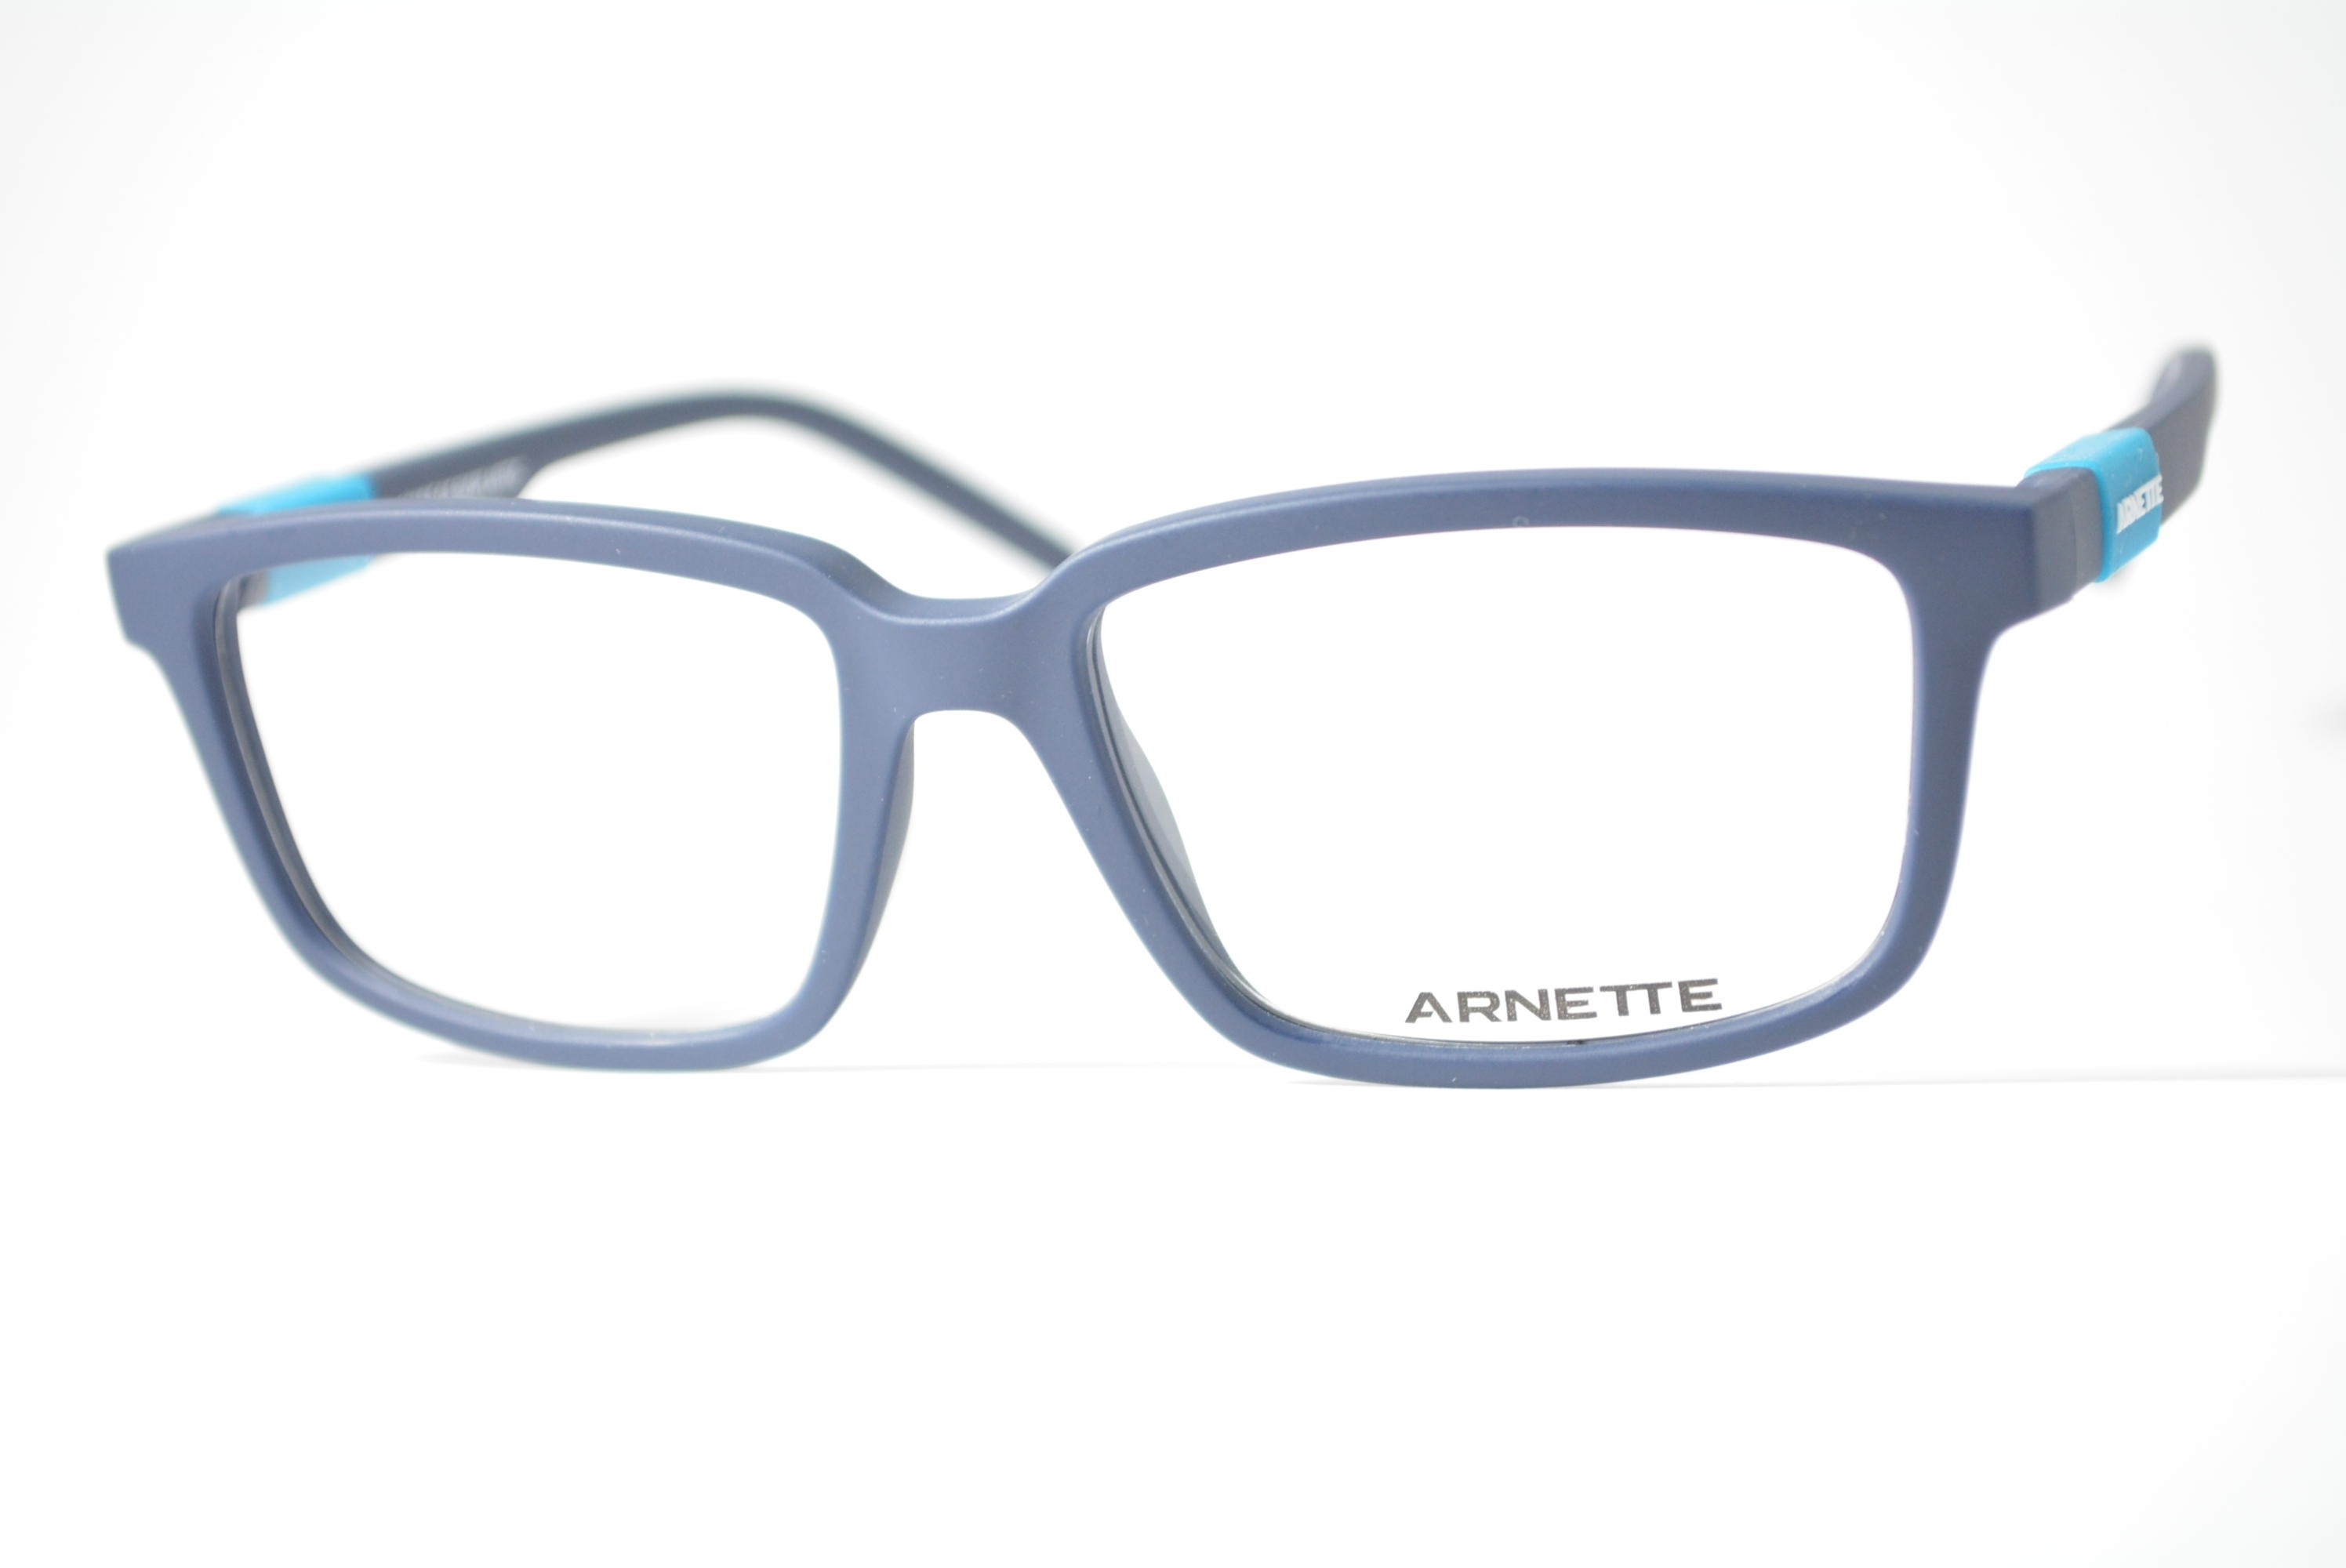 armação de óculos Arnette Infantil mod an7219 2759